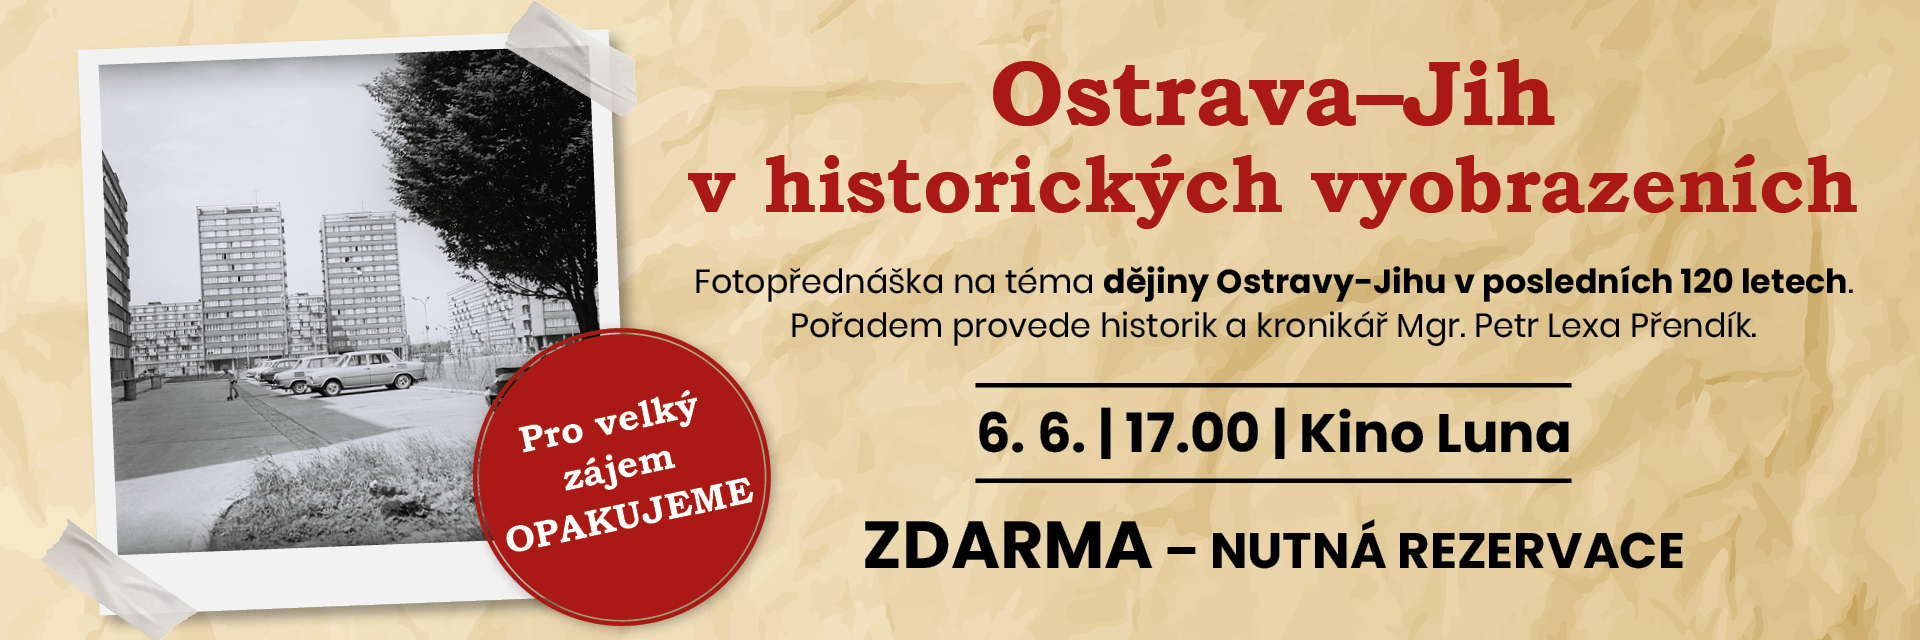 Ostrava v historických vyobrazeních 2